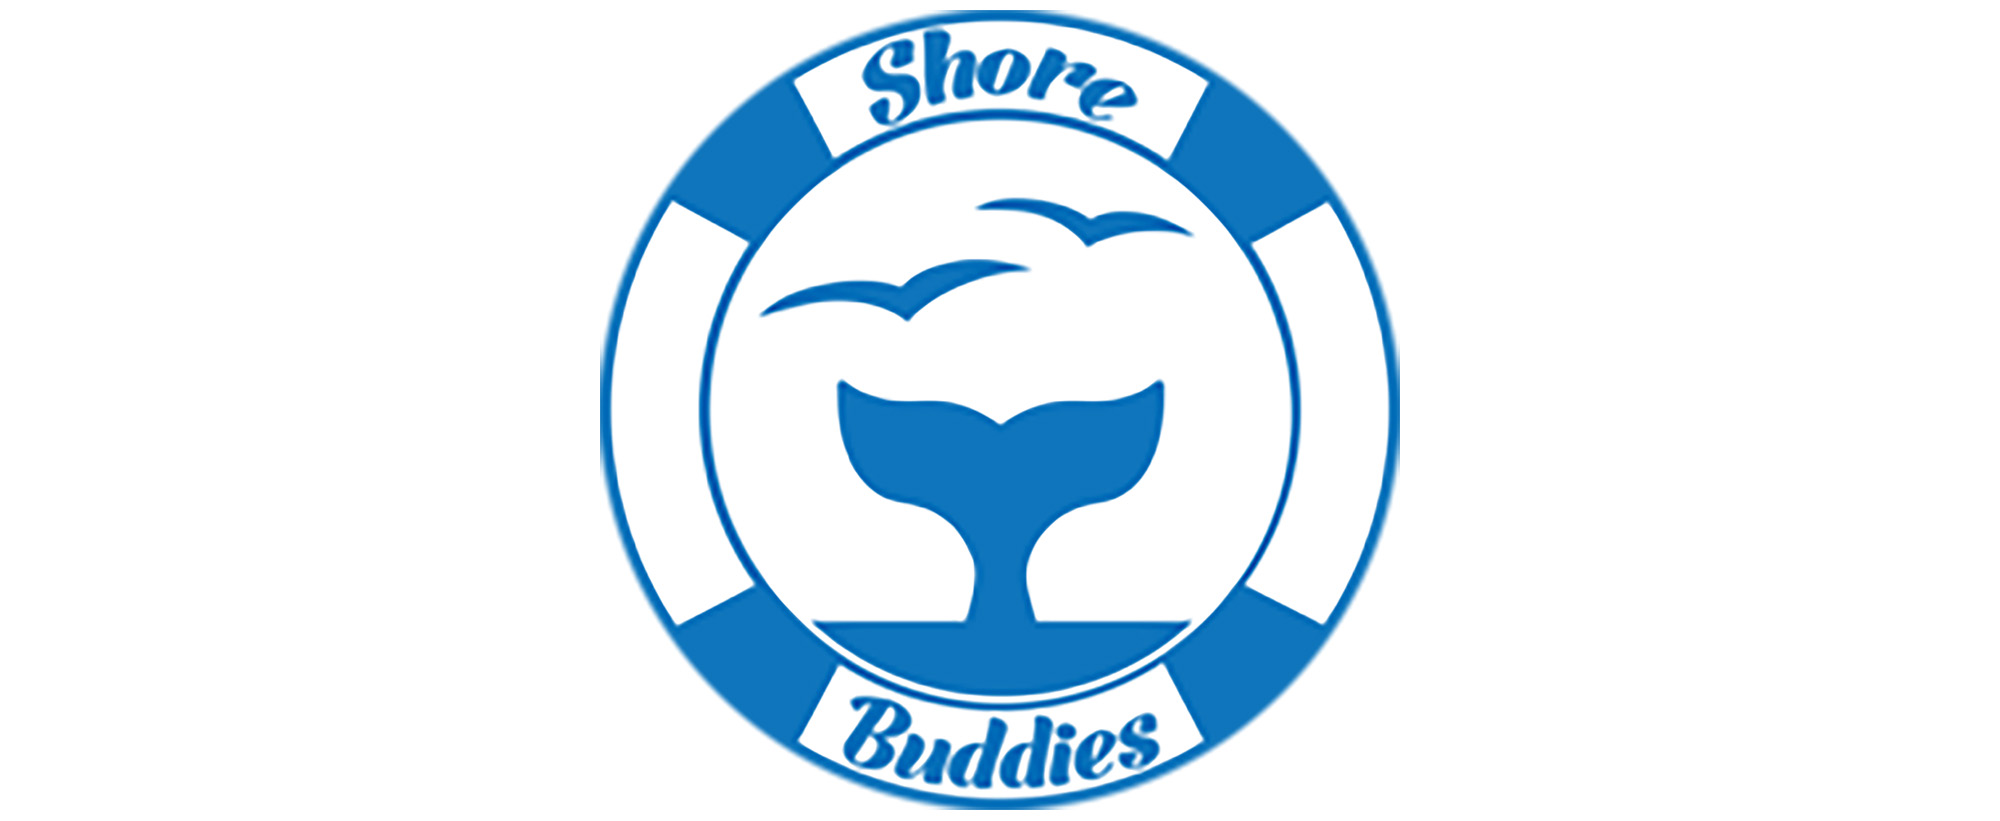 Shore Buddies; Success Stories